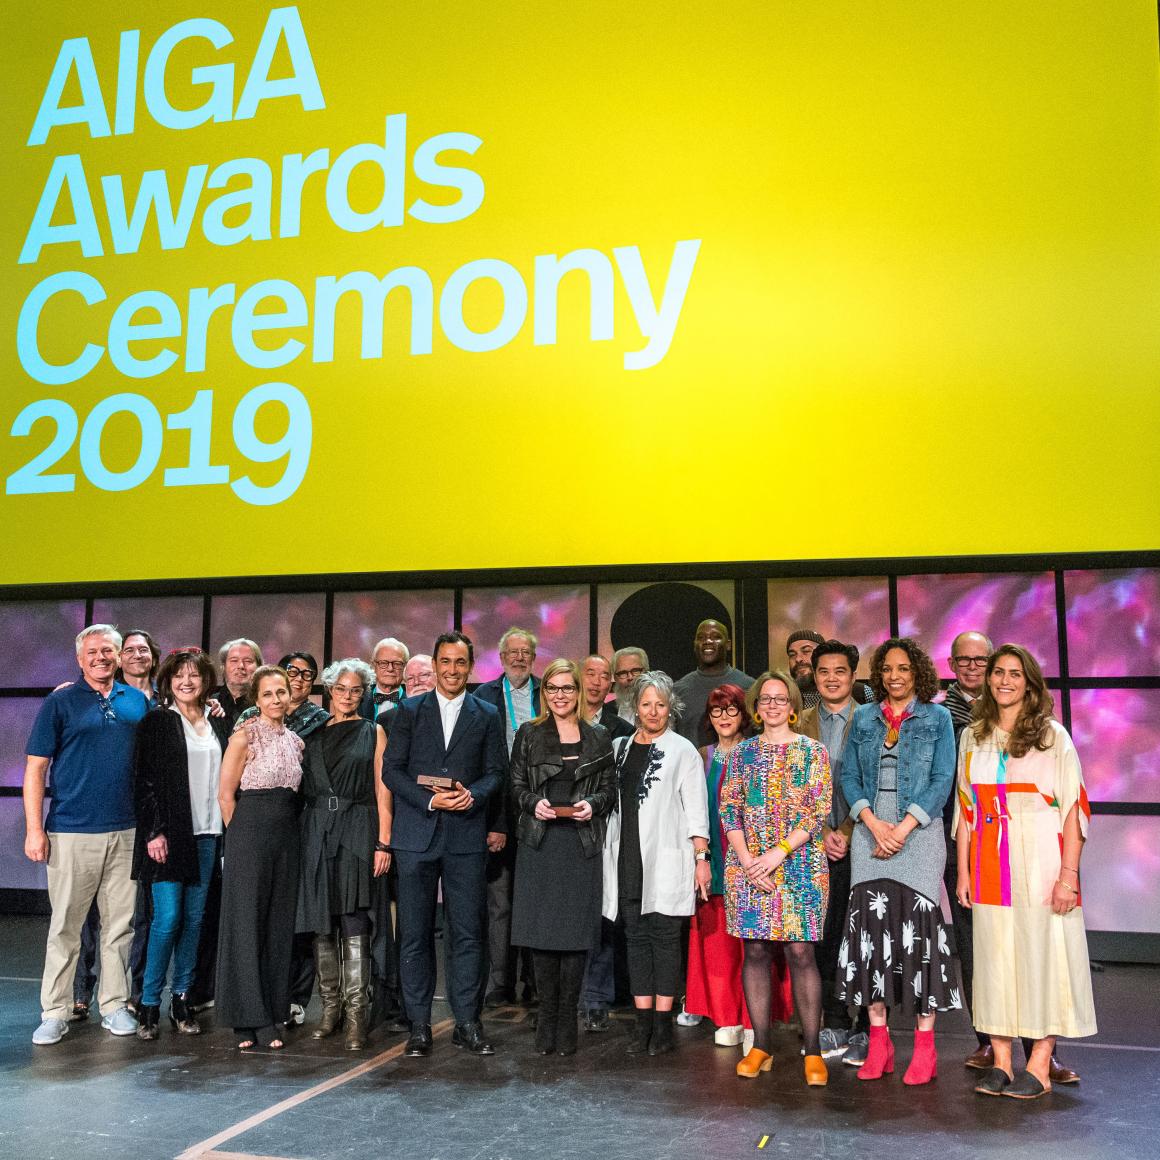 A photo of the 2019 AIGA Awards Ceremony